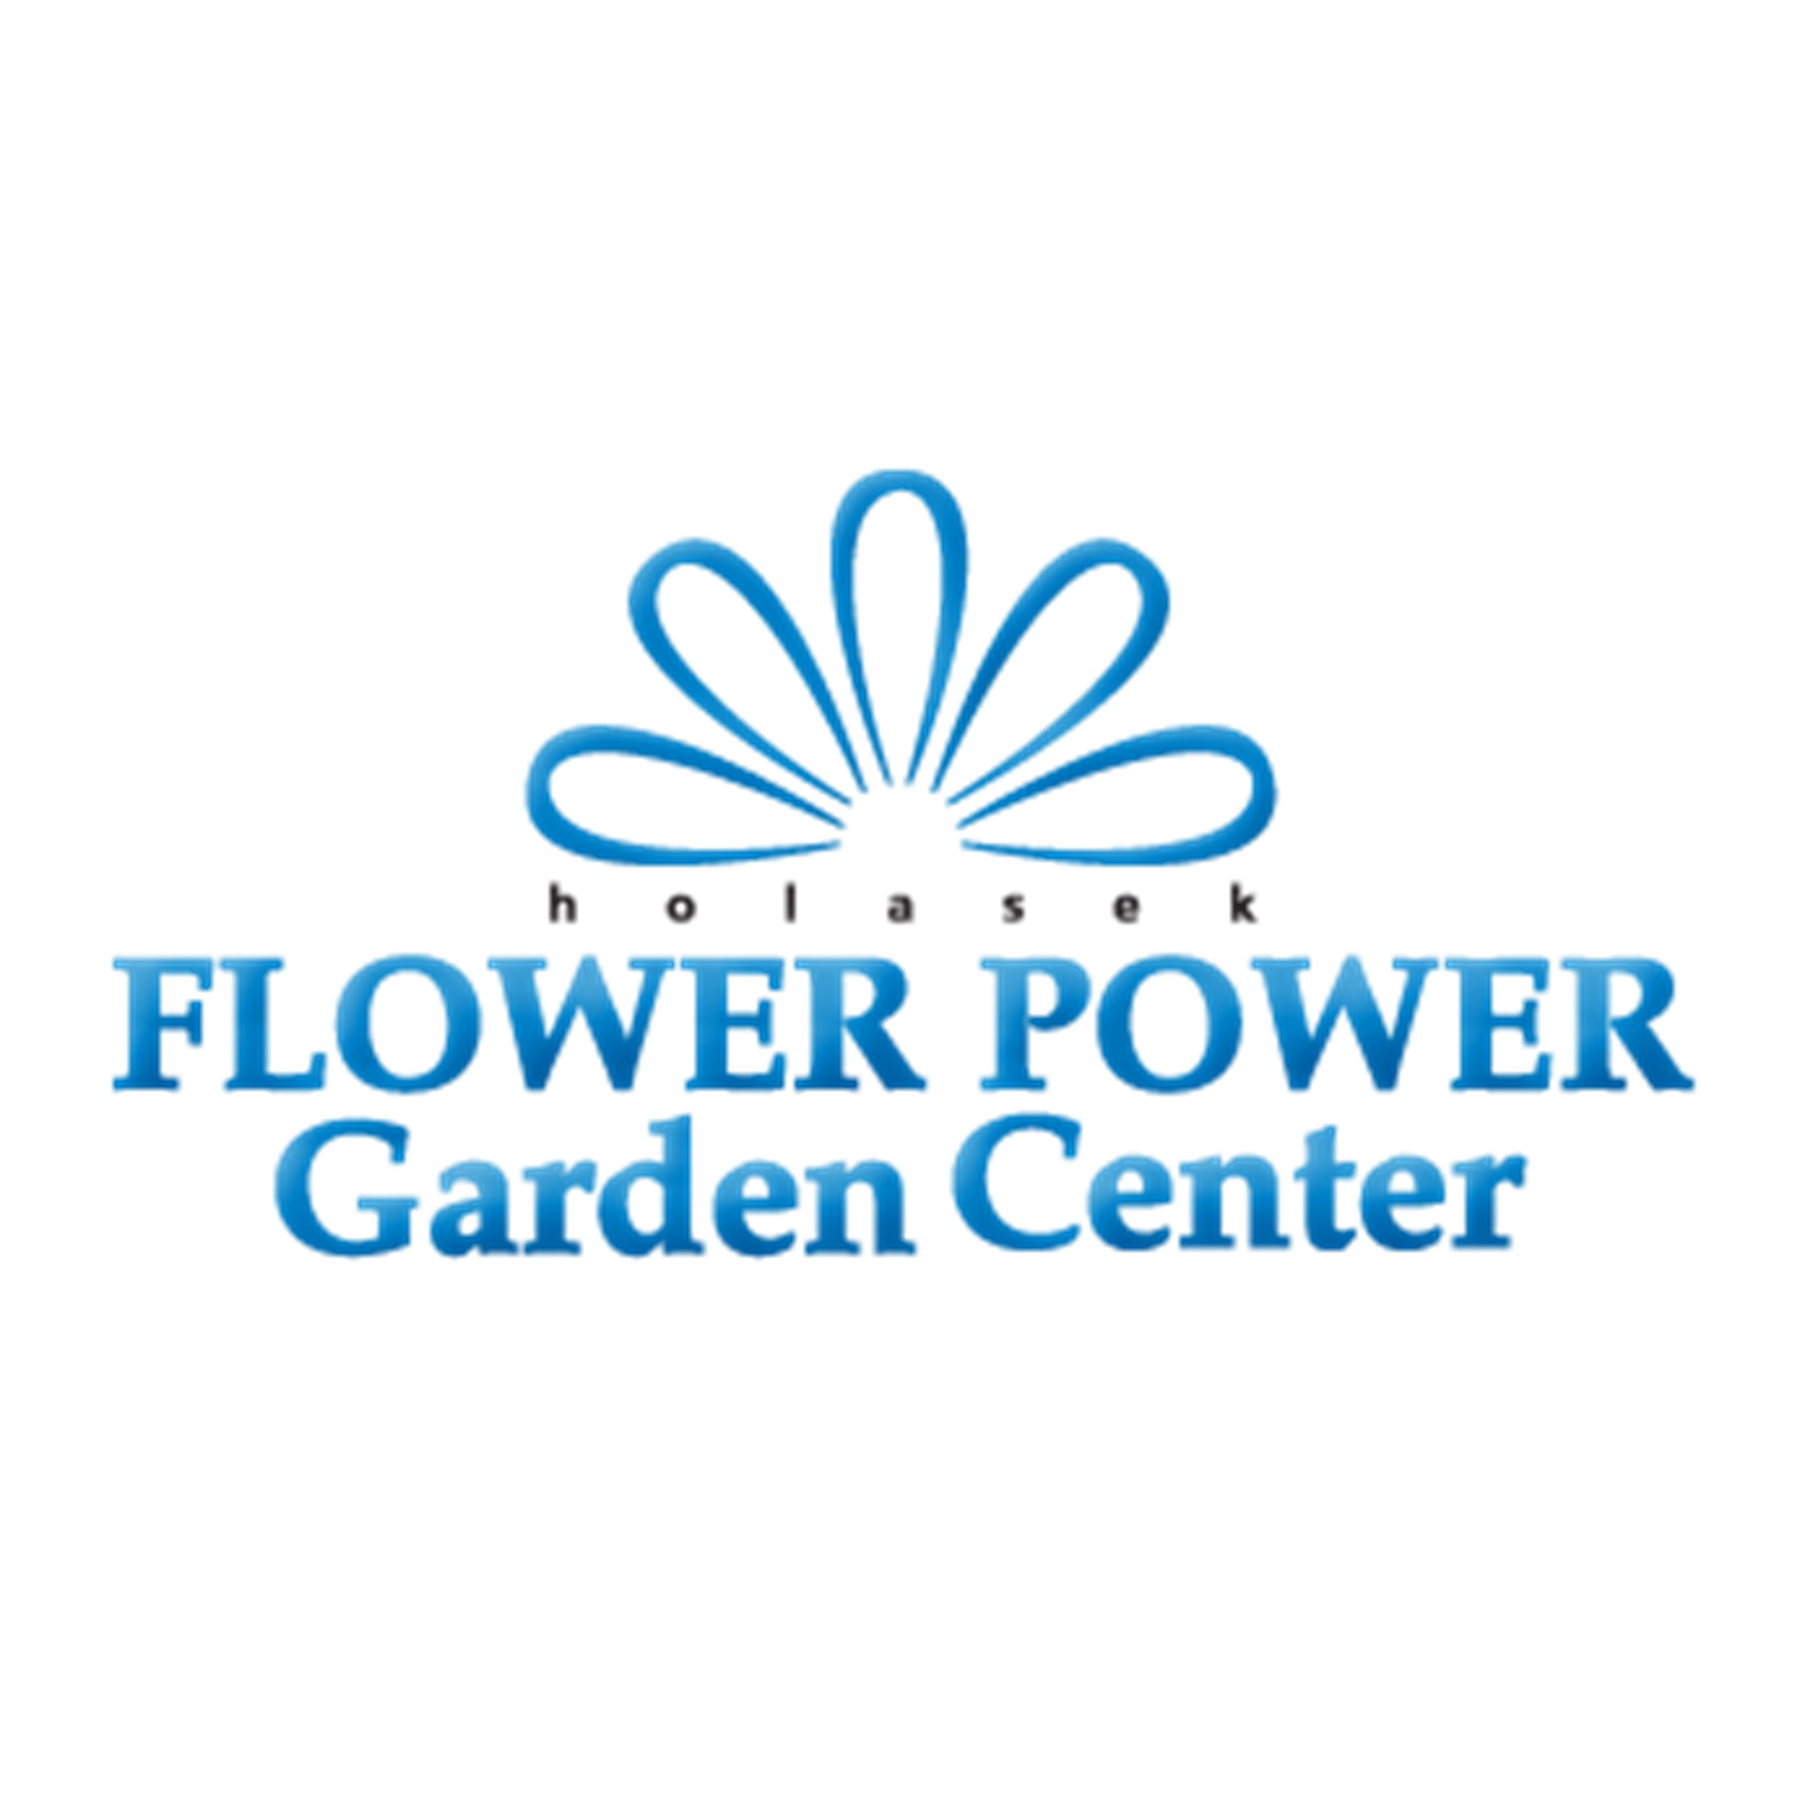 Holasek Flower Power